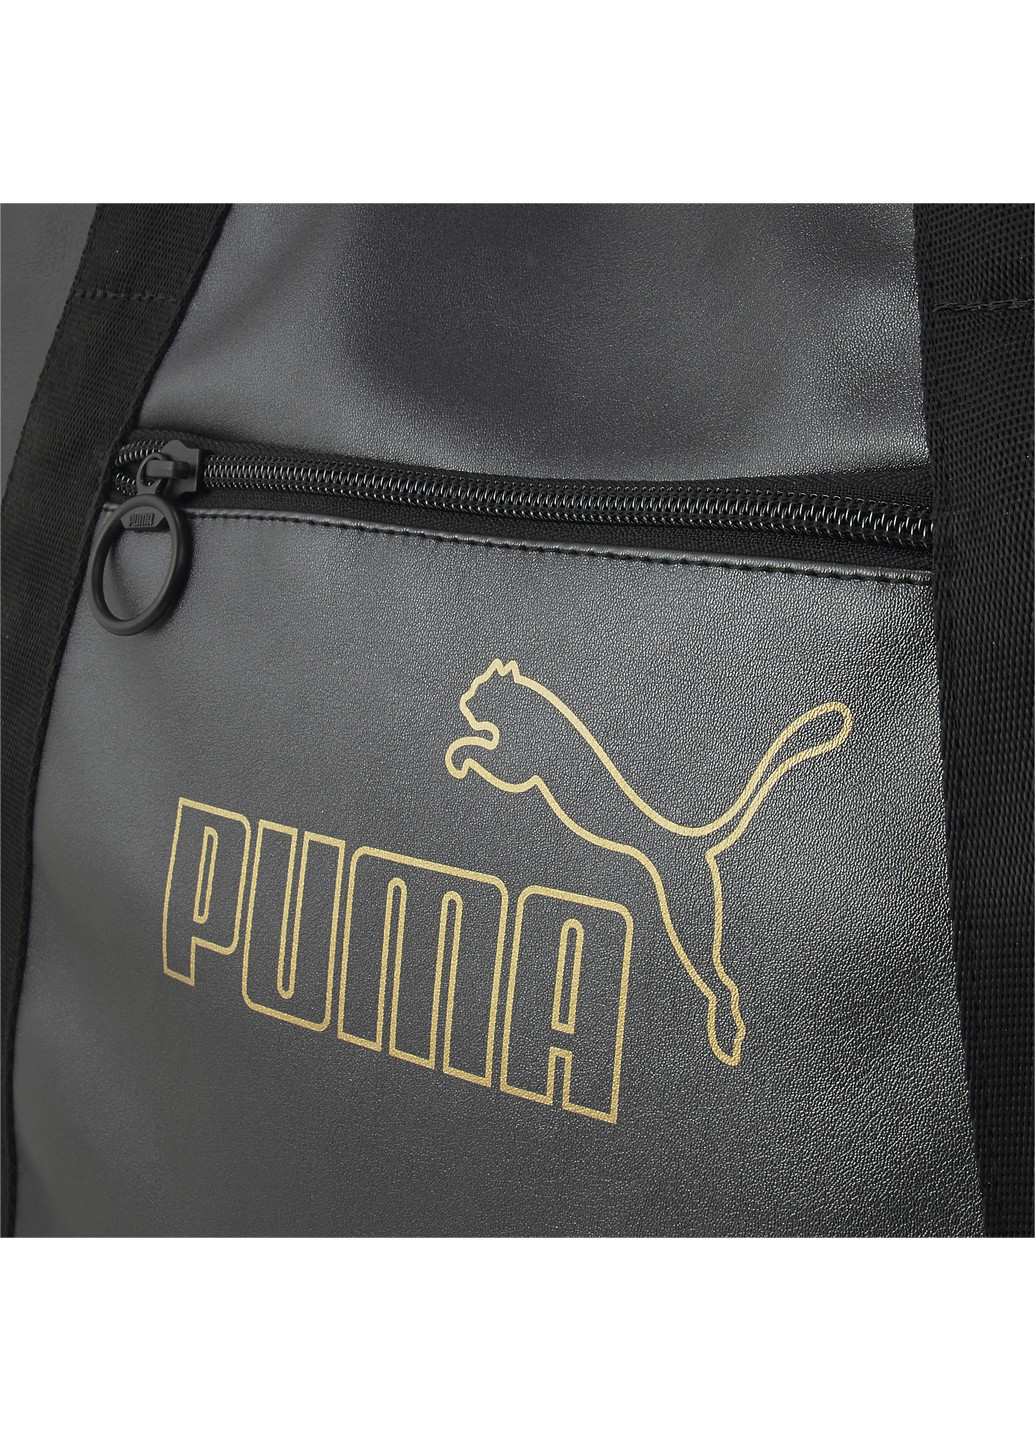 Сумка Core Up Large Shopper Puma однотонная чёрная спортивная